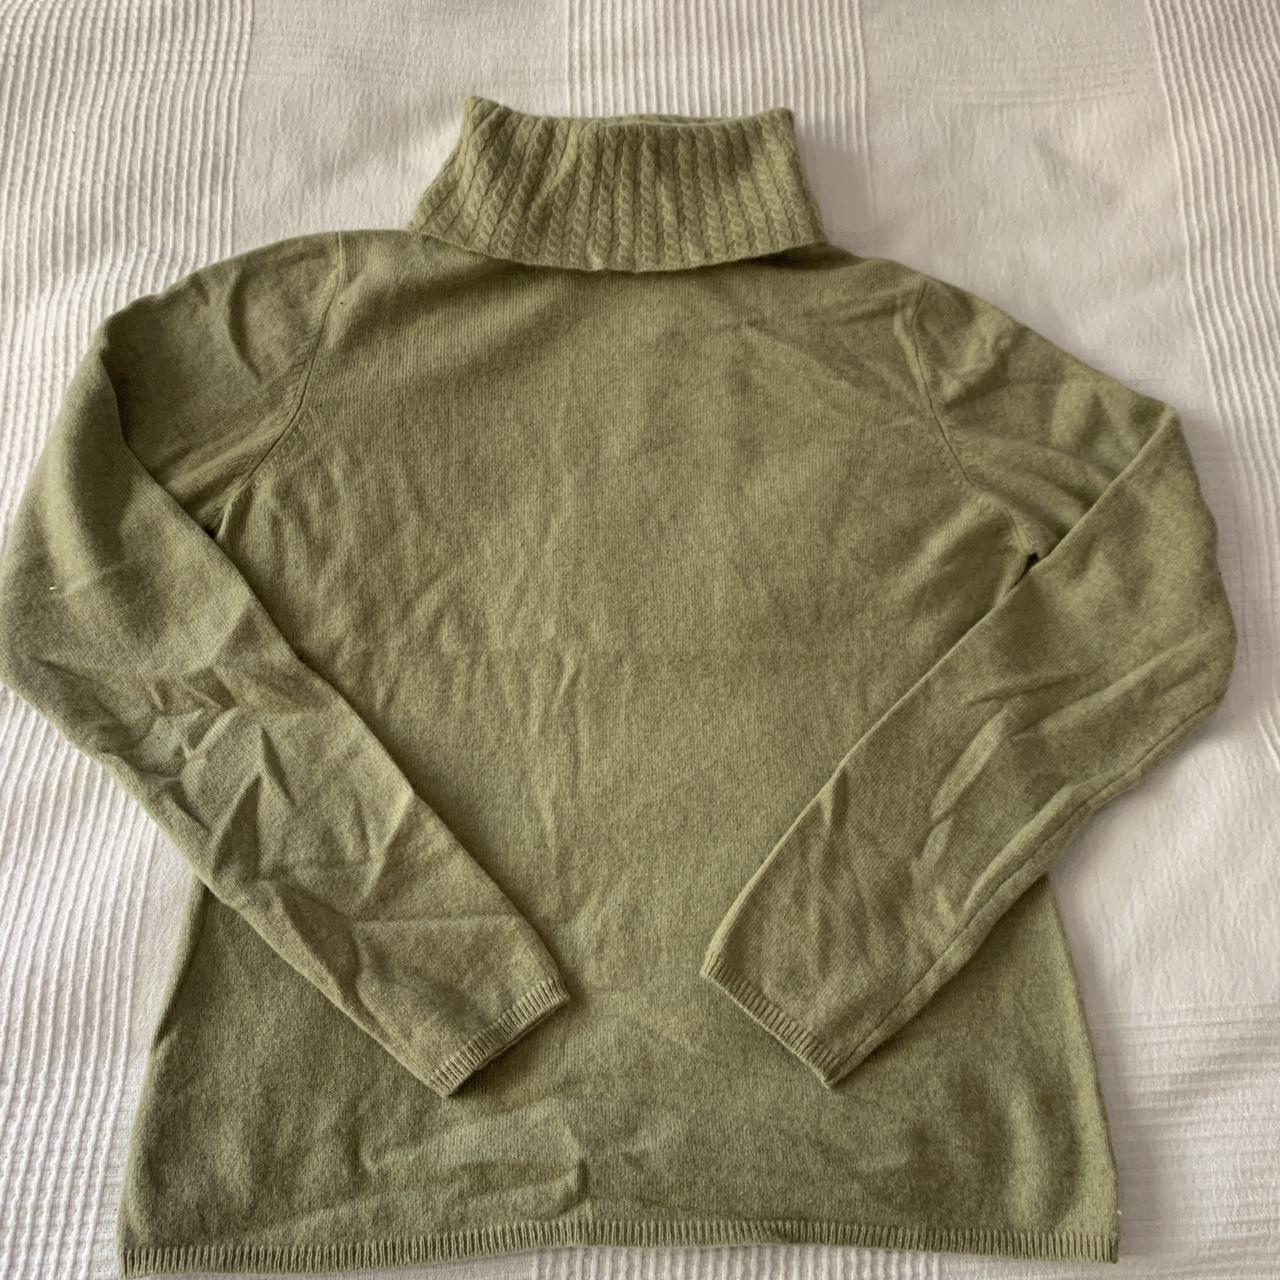 Sage green cashmere turtleneck sweater from Griffen!... - Depop